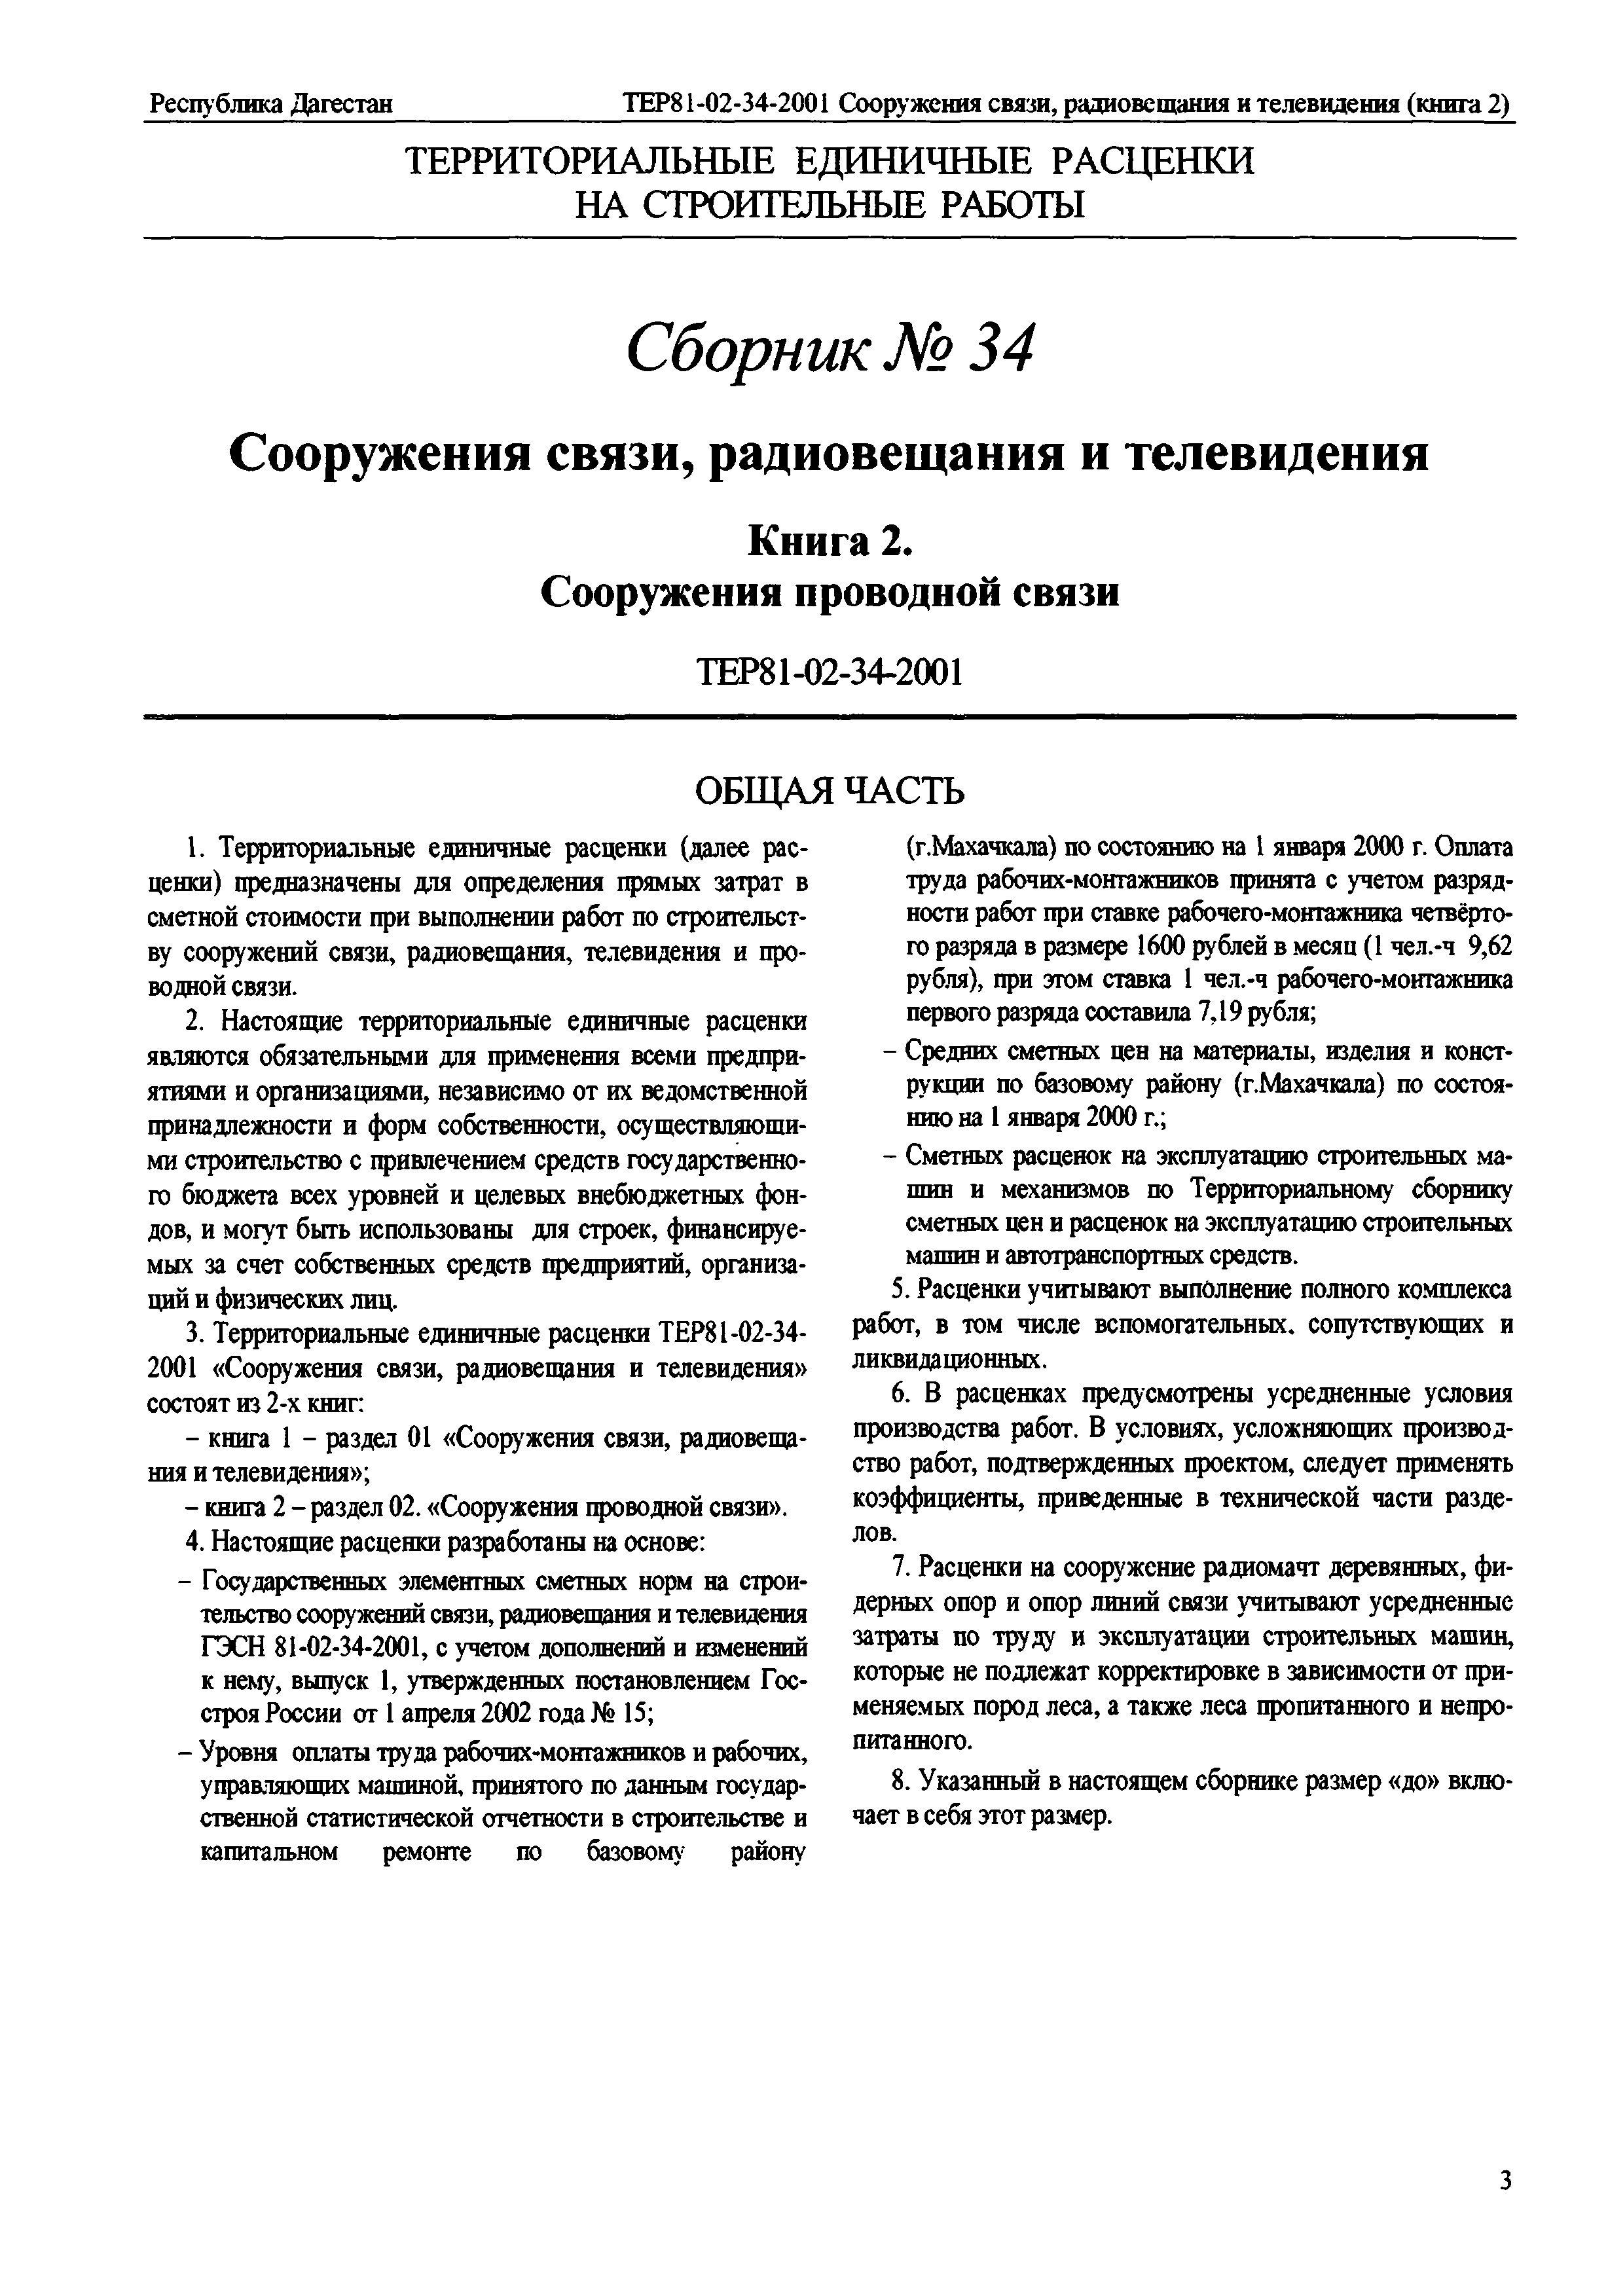 ТЕР Республика Дагестан 2001-34